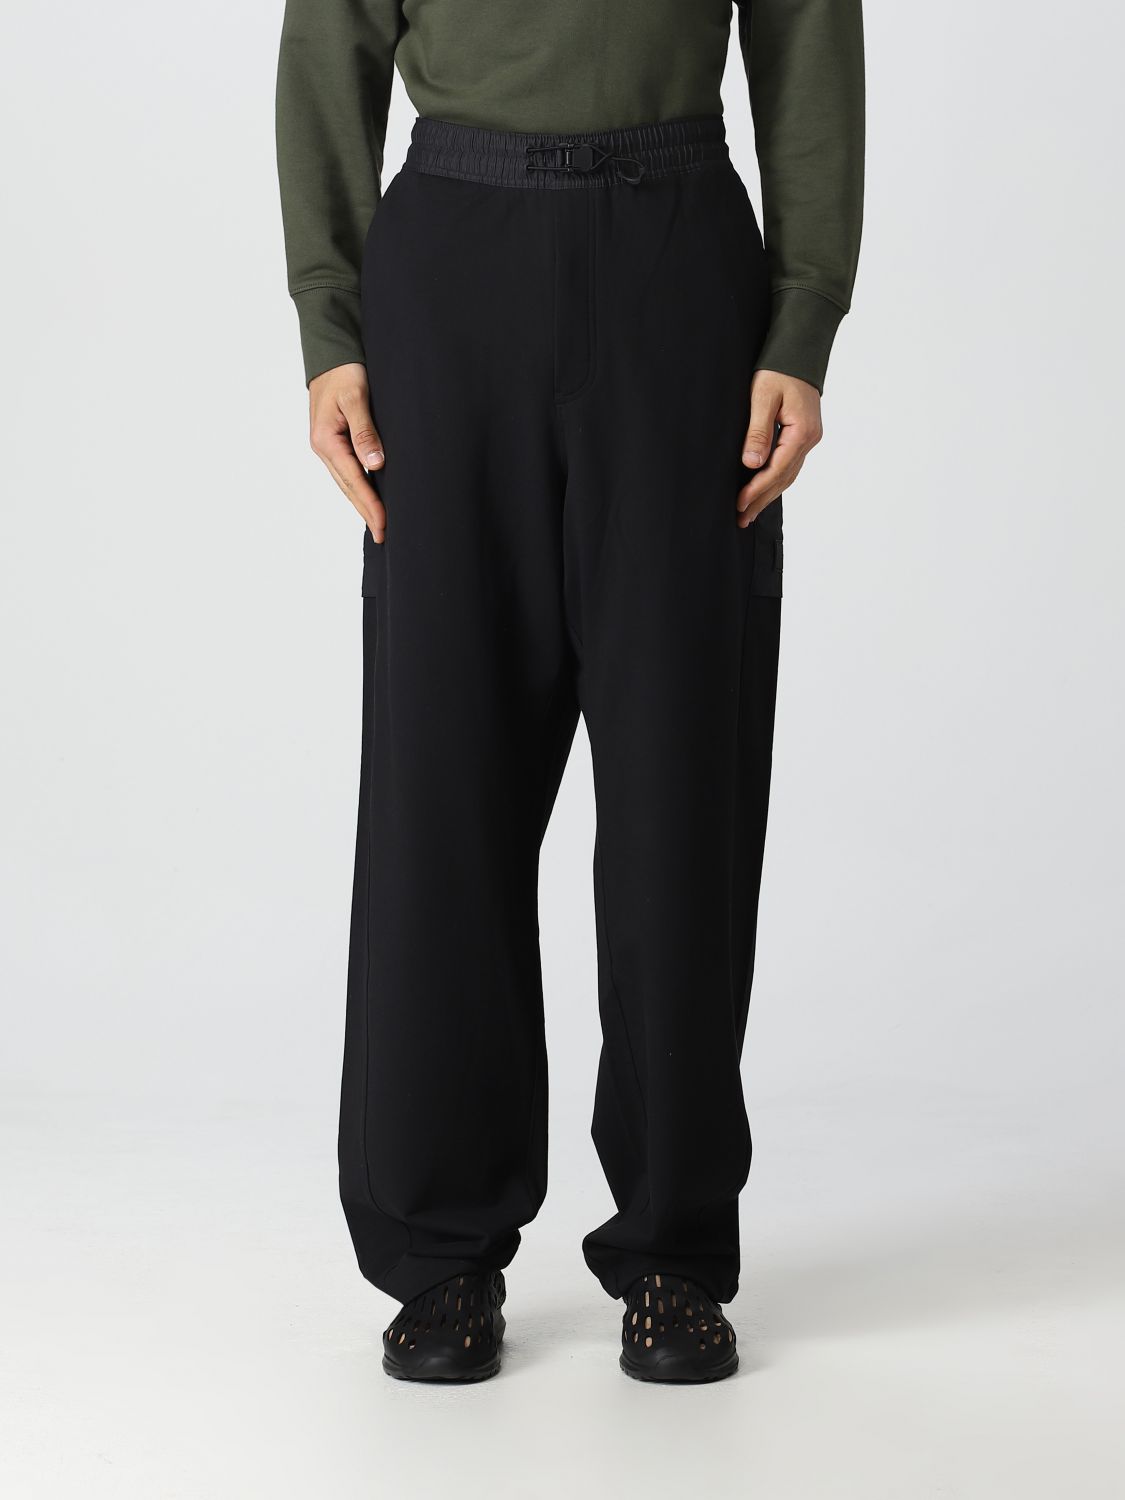 Y-3: pants for man - Black | Y-3 pants H63032 online on GIGLIO.COM